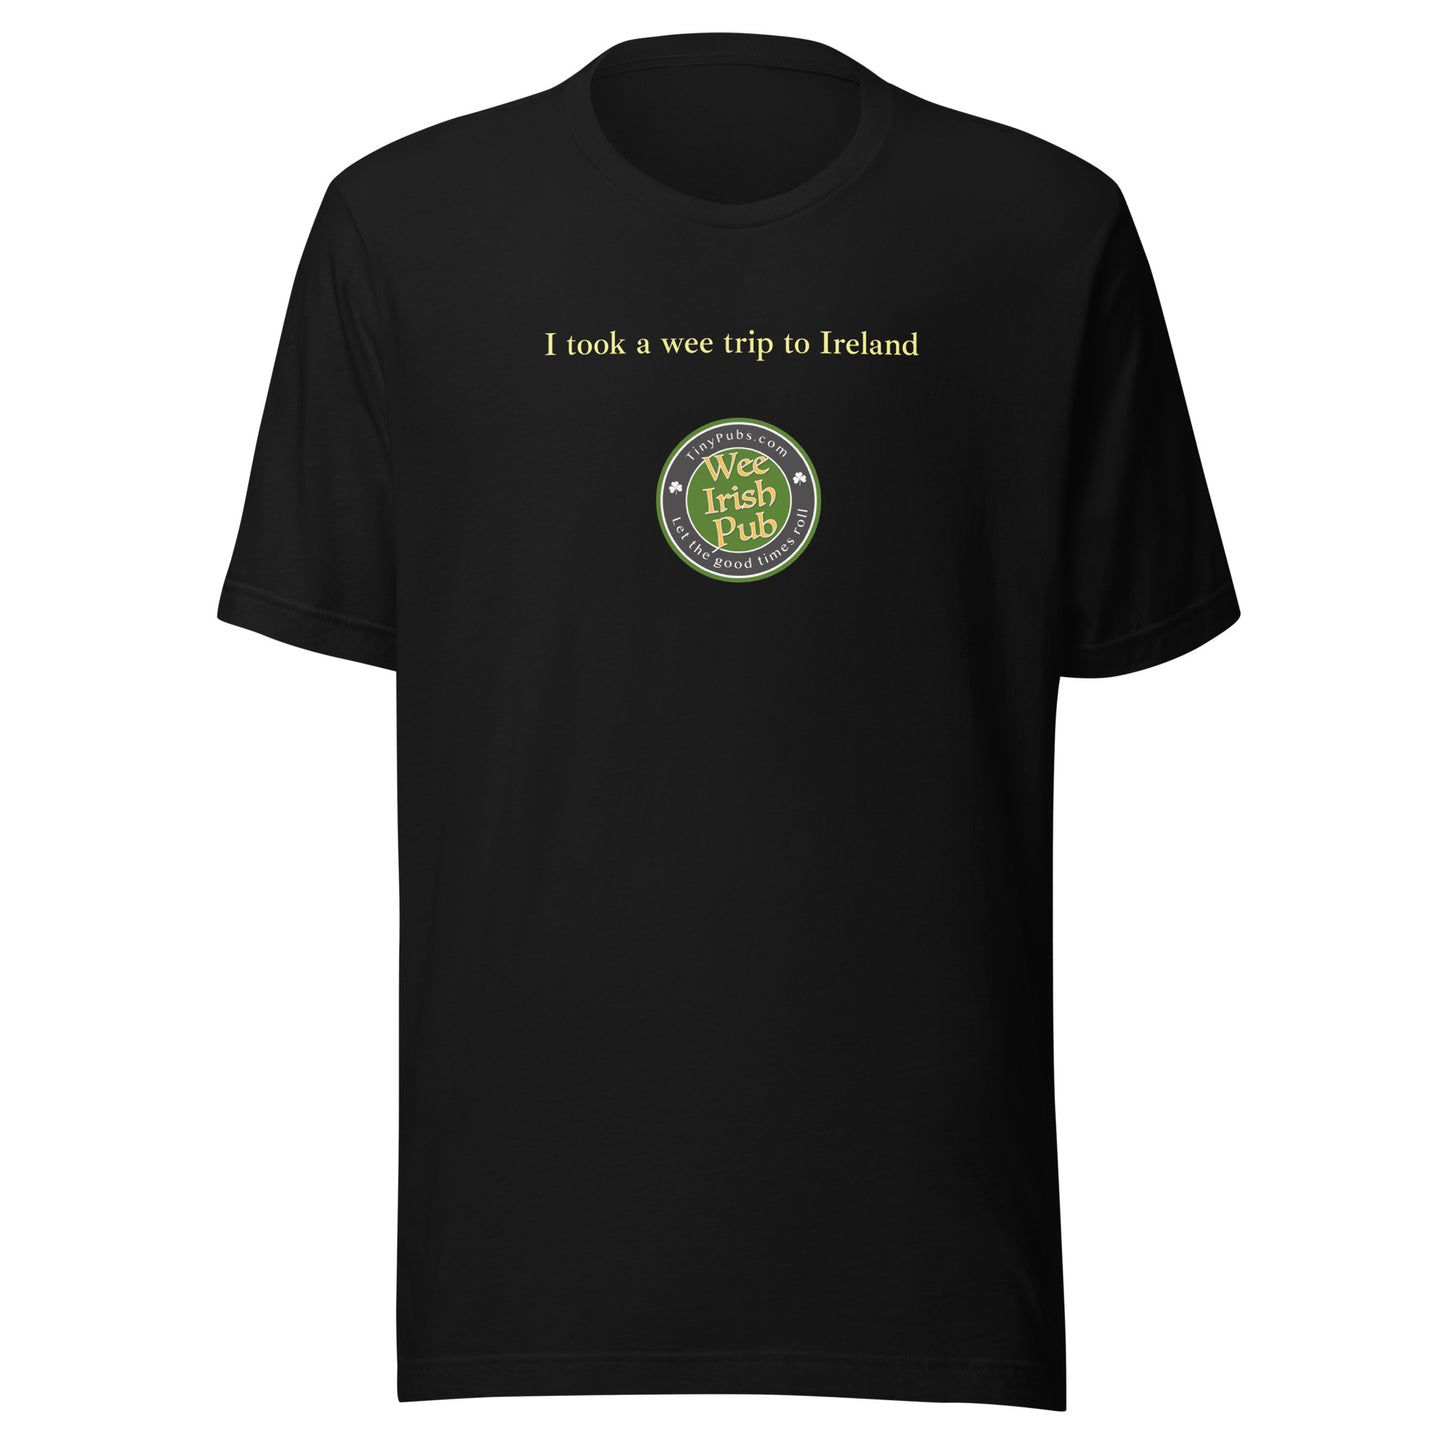 Wee Irish Pub "I took a wee trip to Ireland" Unisex t-shirt